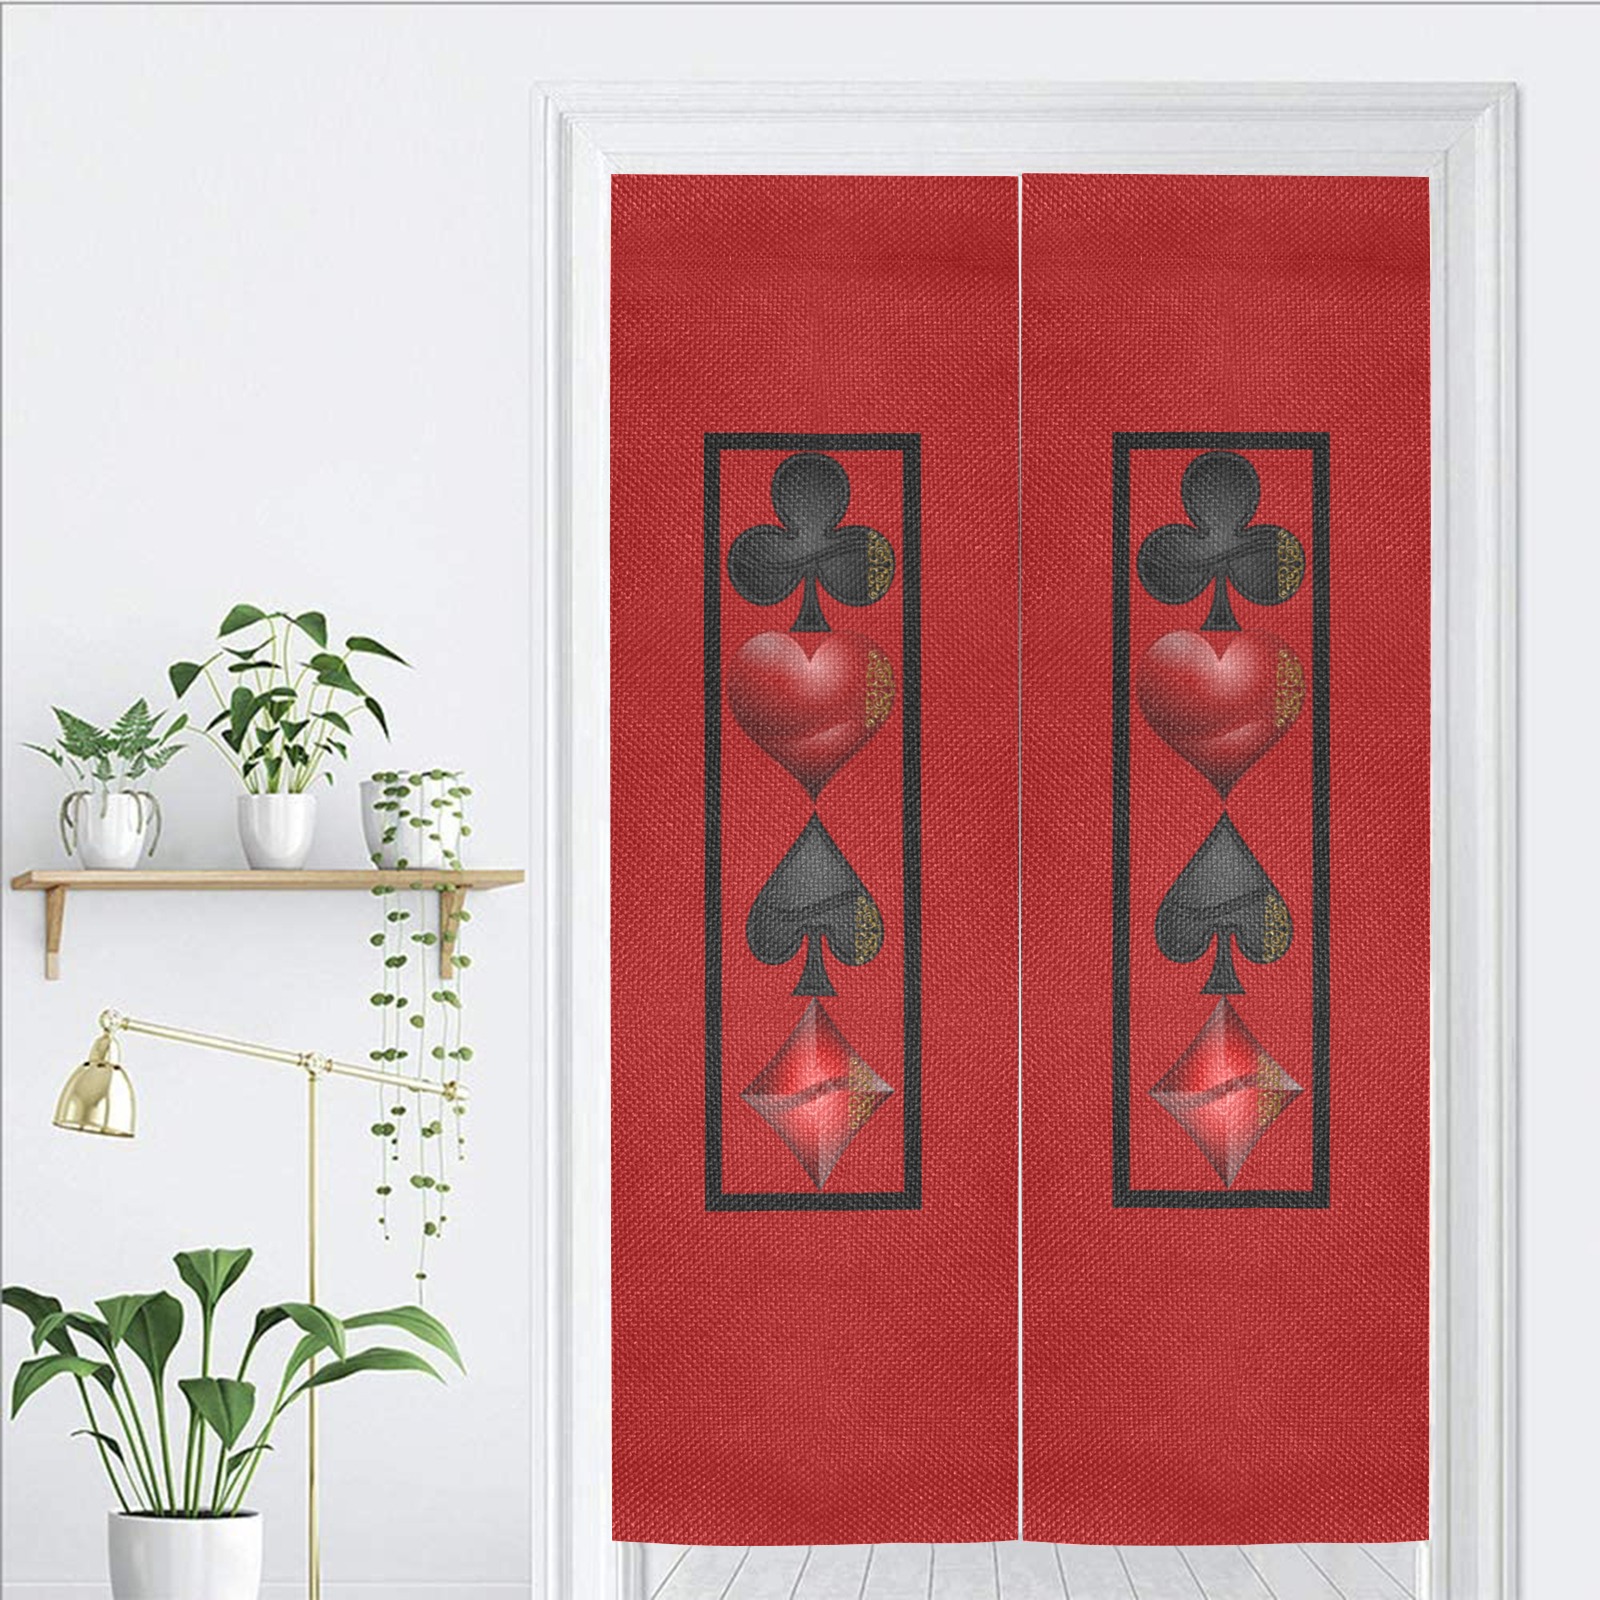 Las Vegas Playing Card Symbols / Red Door Curtain Tapestry